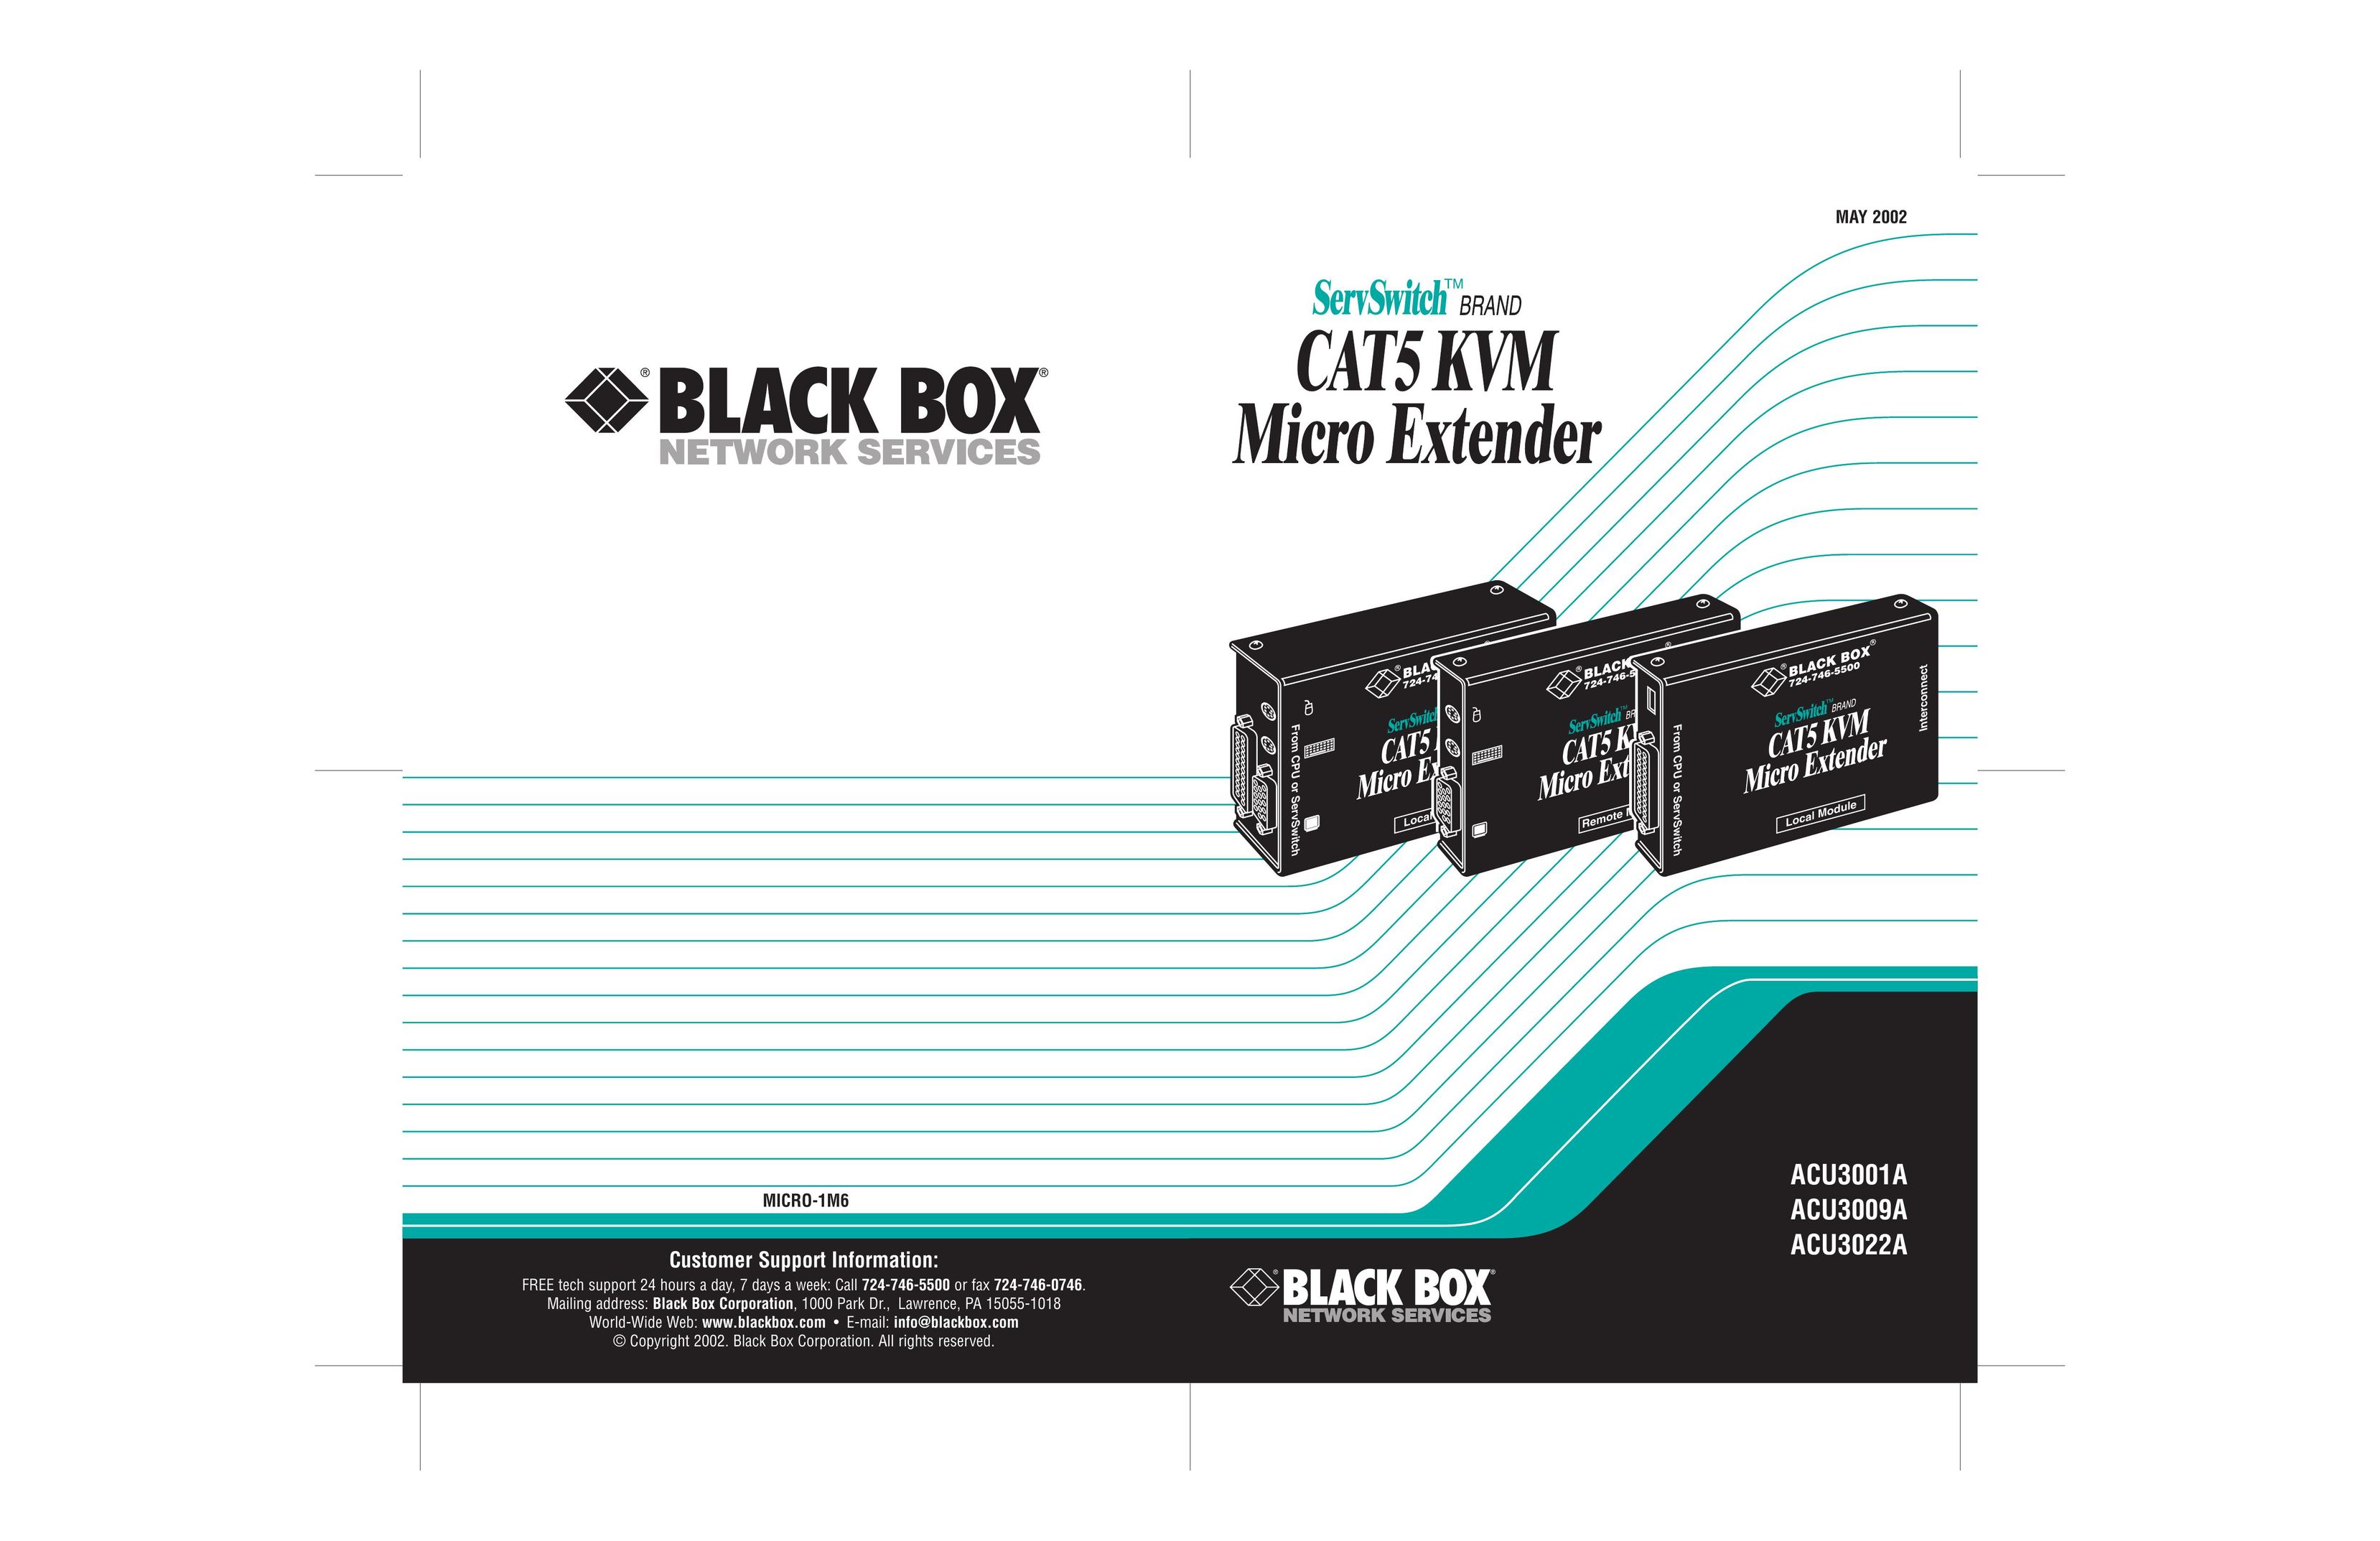 Black Box ACU3009A Network Hardware User Manual